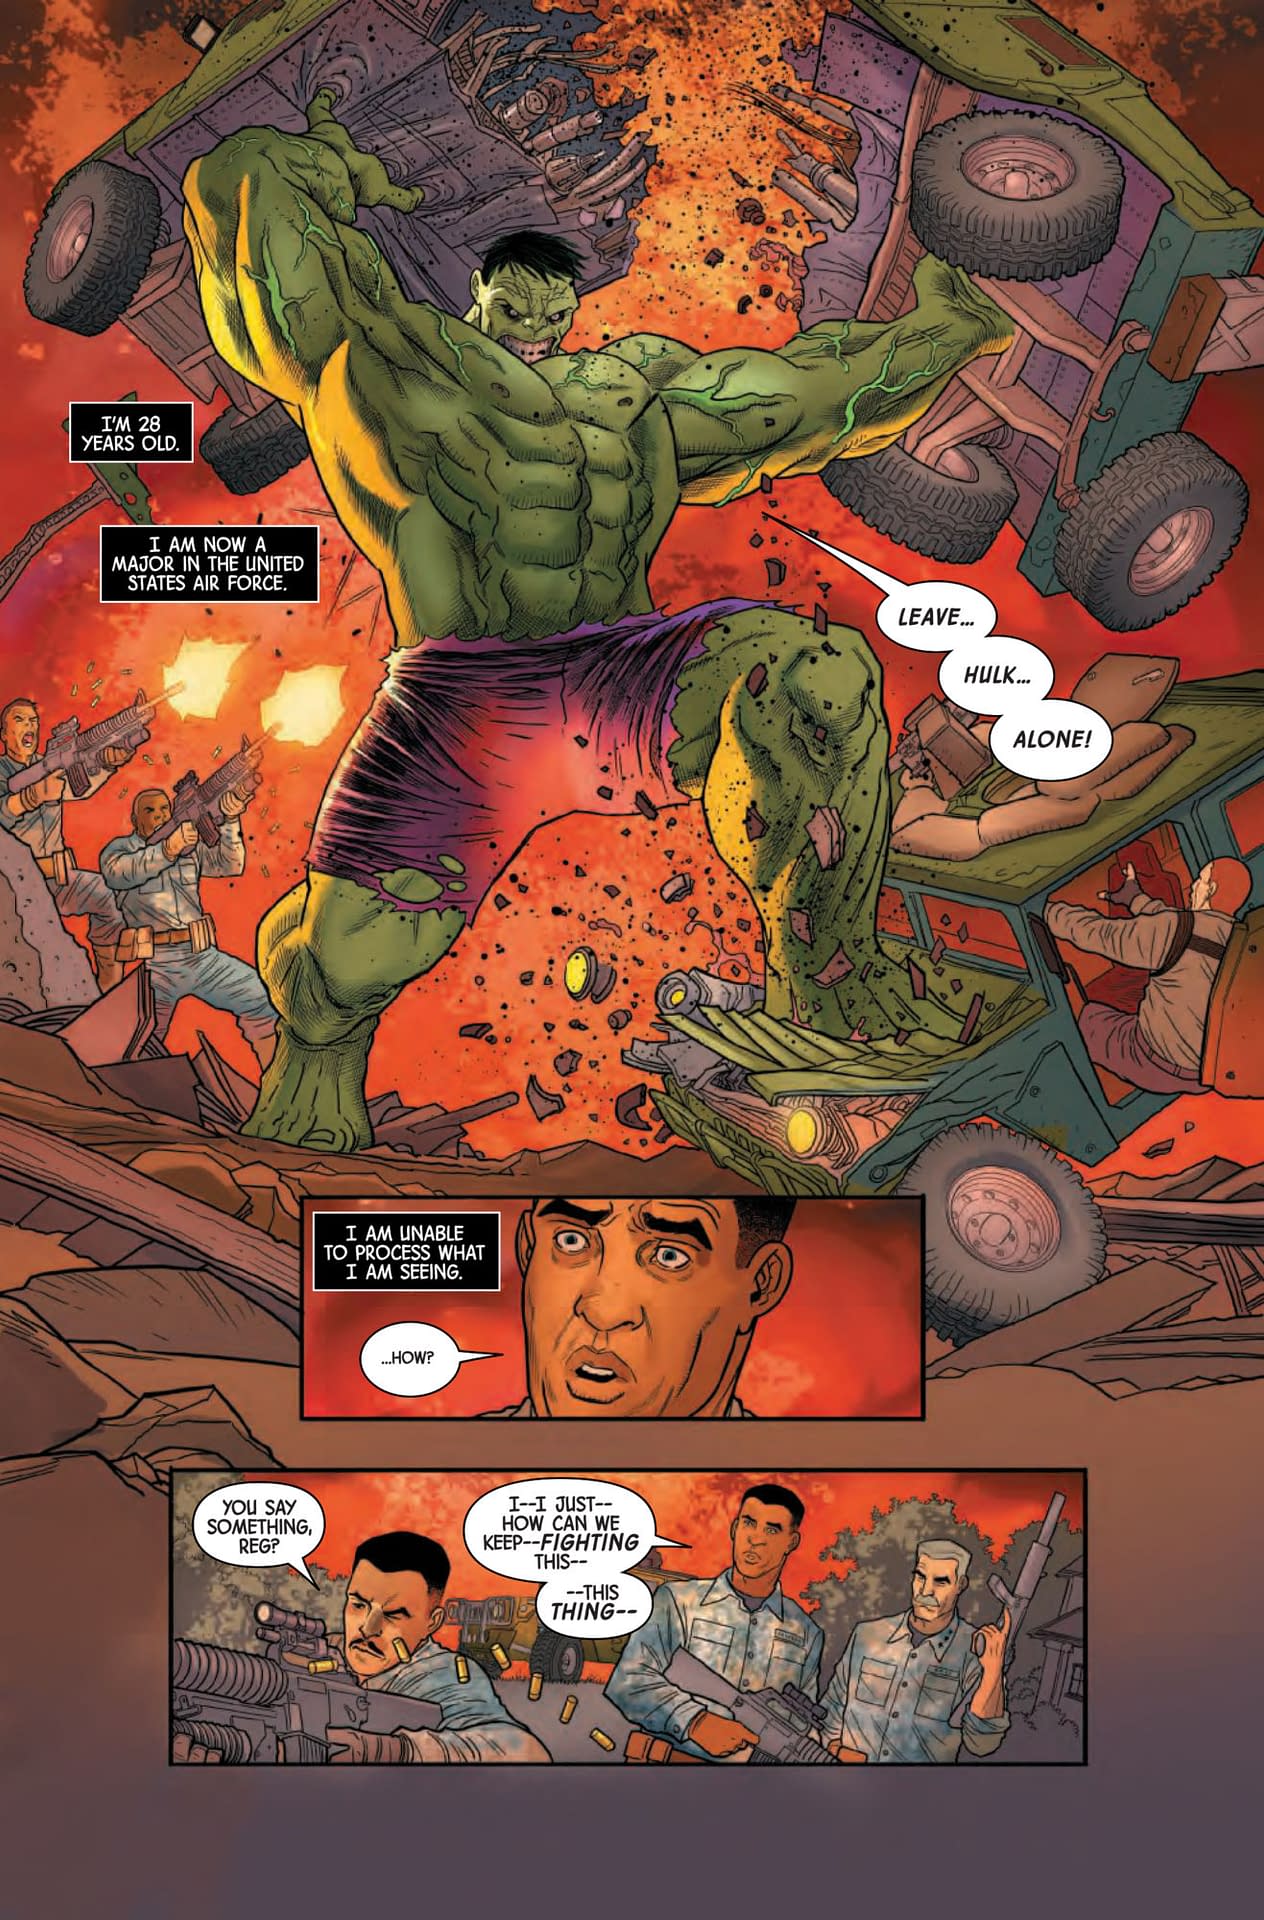 Immortal Hulk #21 - Back to Hulk's 2005 Origins [Preview]